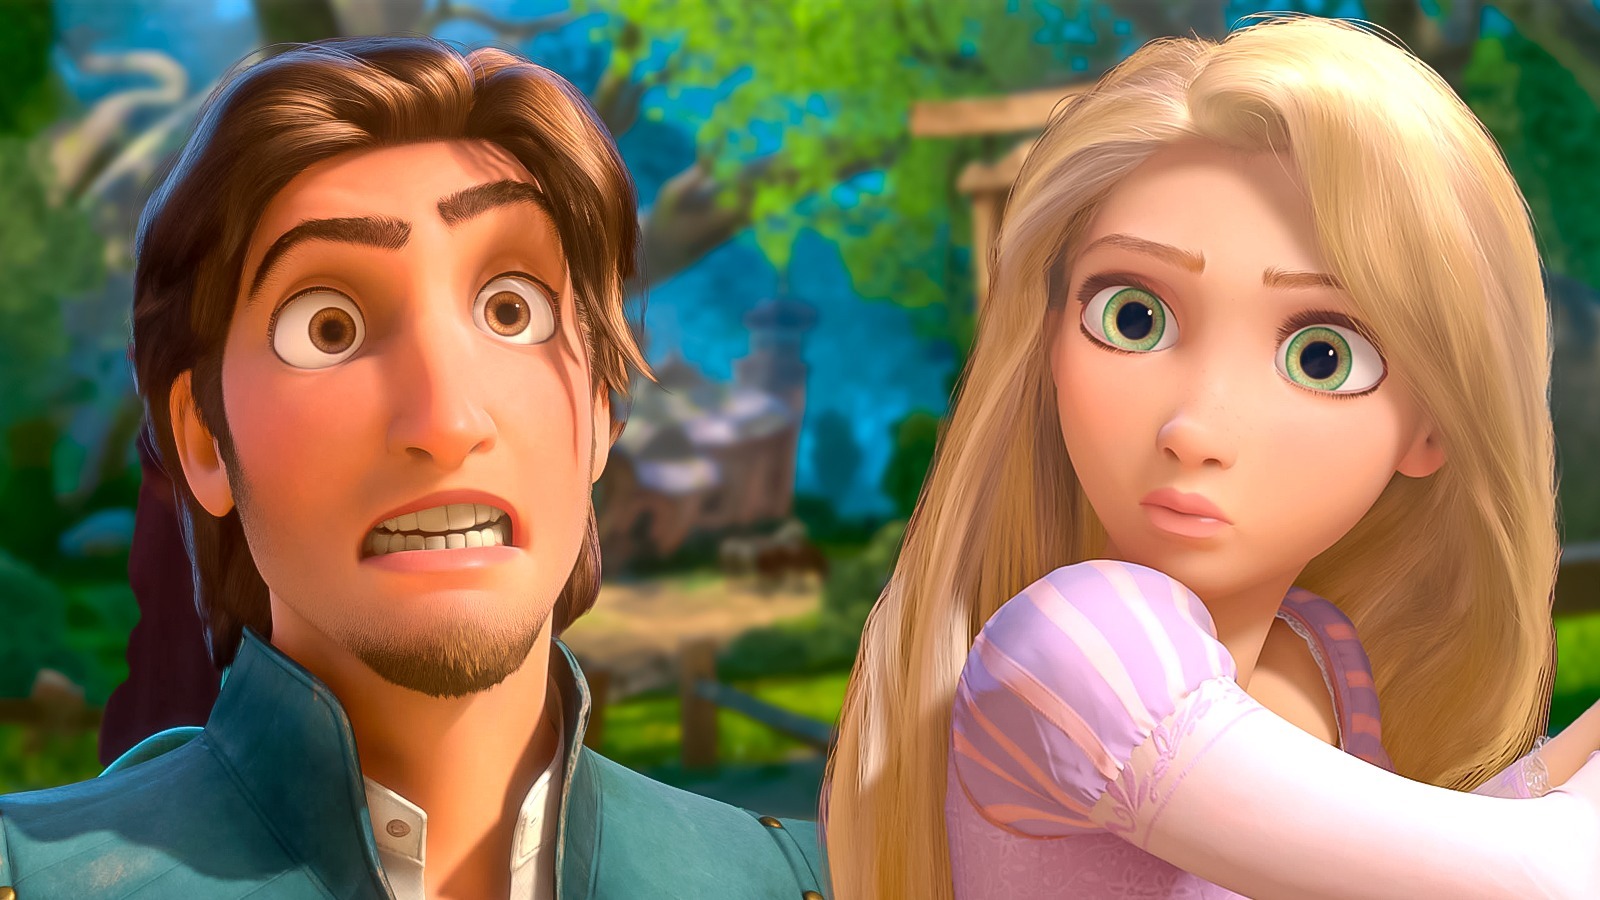 Disney Rapunzel - Live Action - First Look 